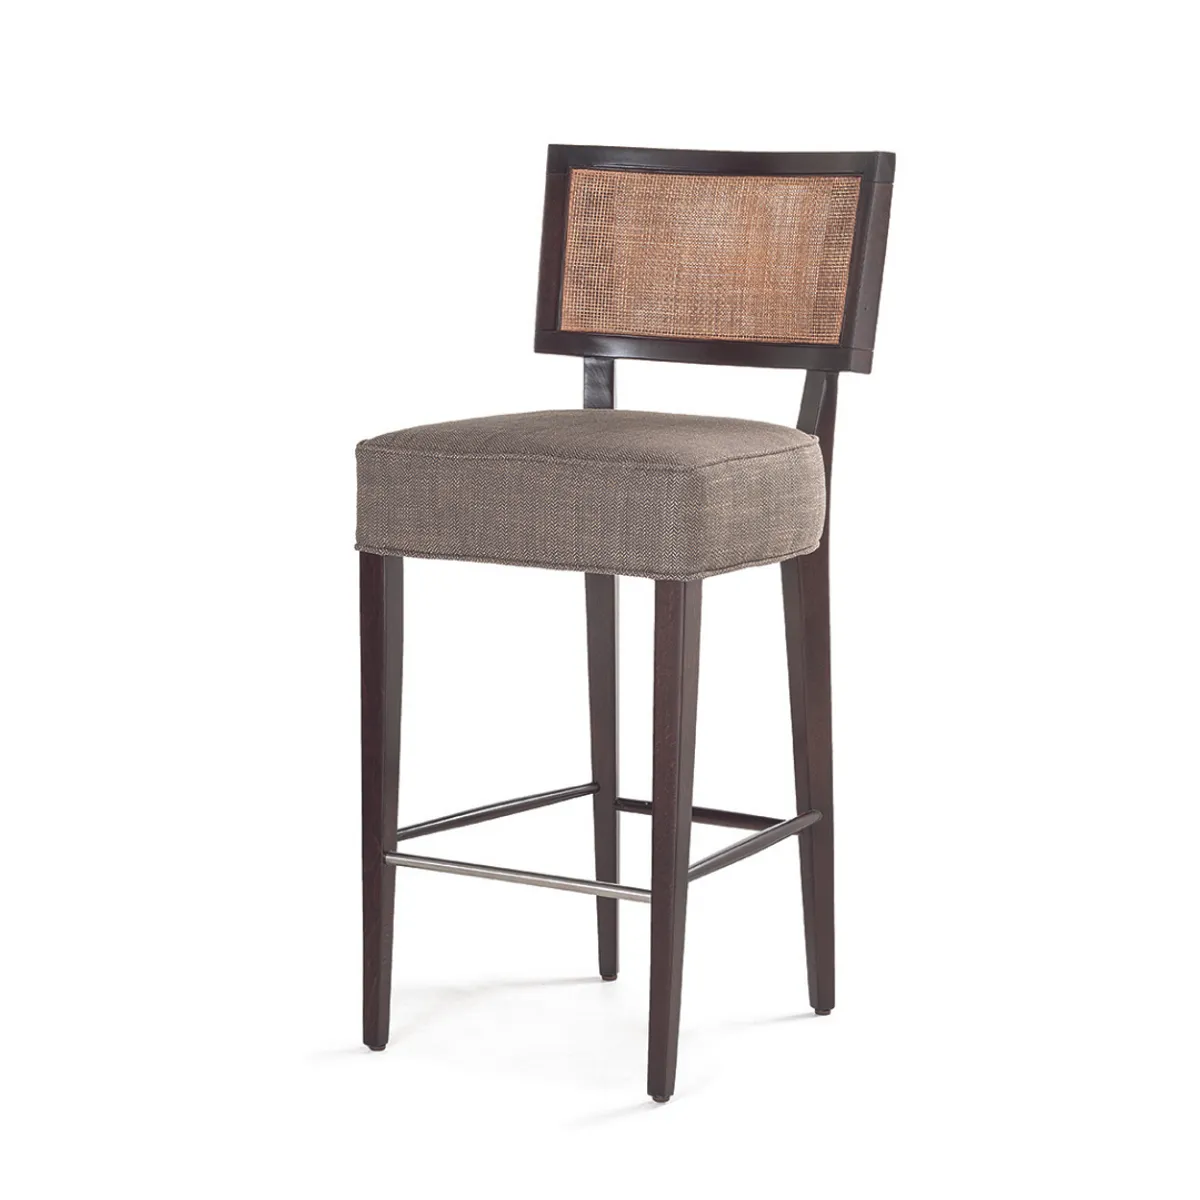 Michigan Wicker bar stool